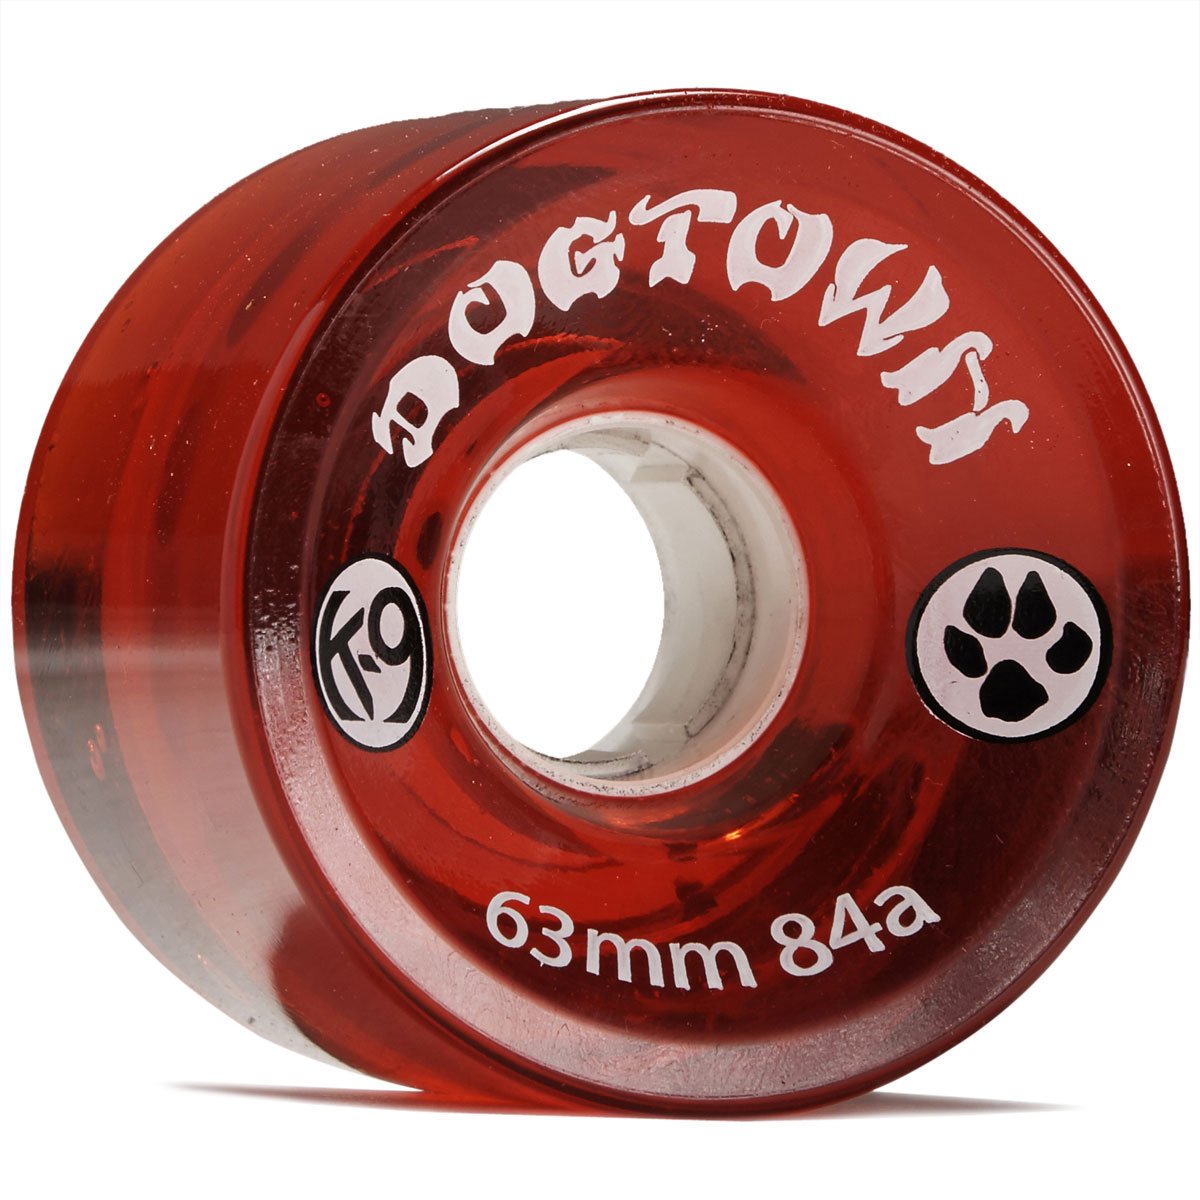 Dogtown K-9 Cruiser 84a Skateboard Wheels - Clear Red - 63mm image 1